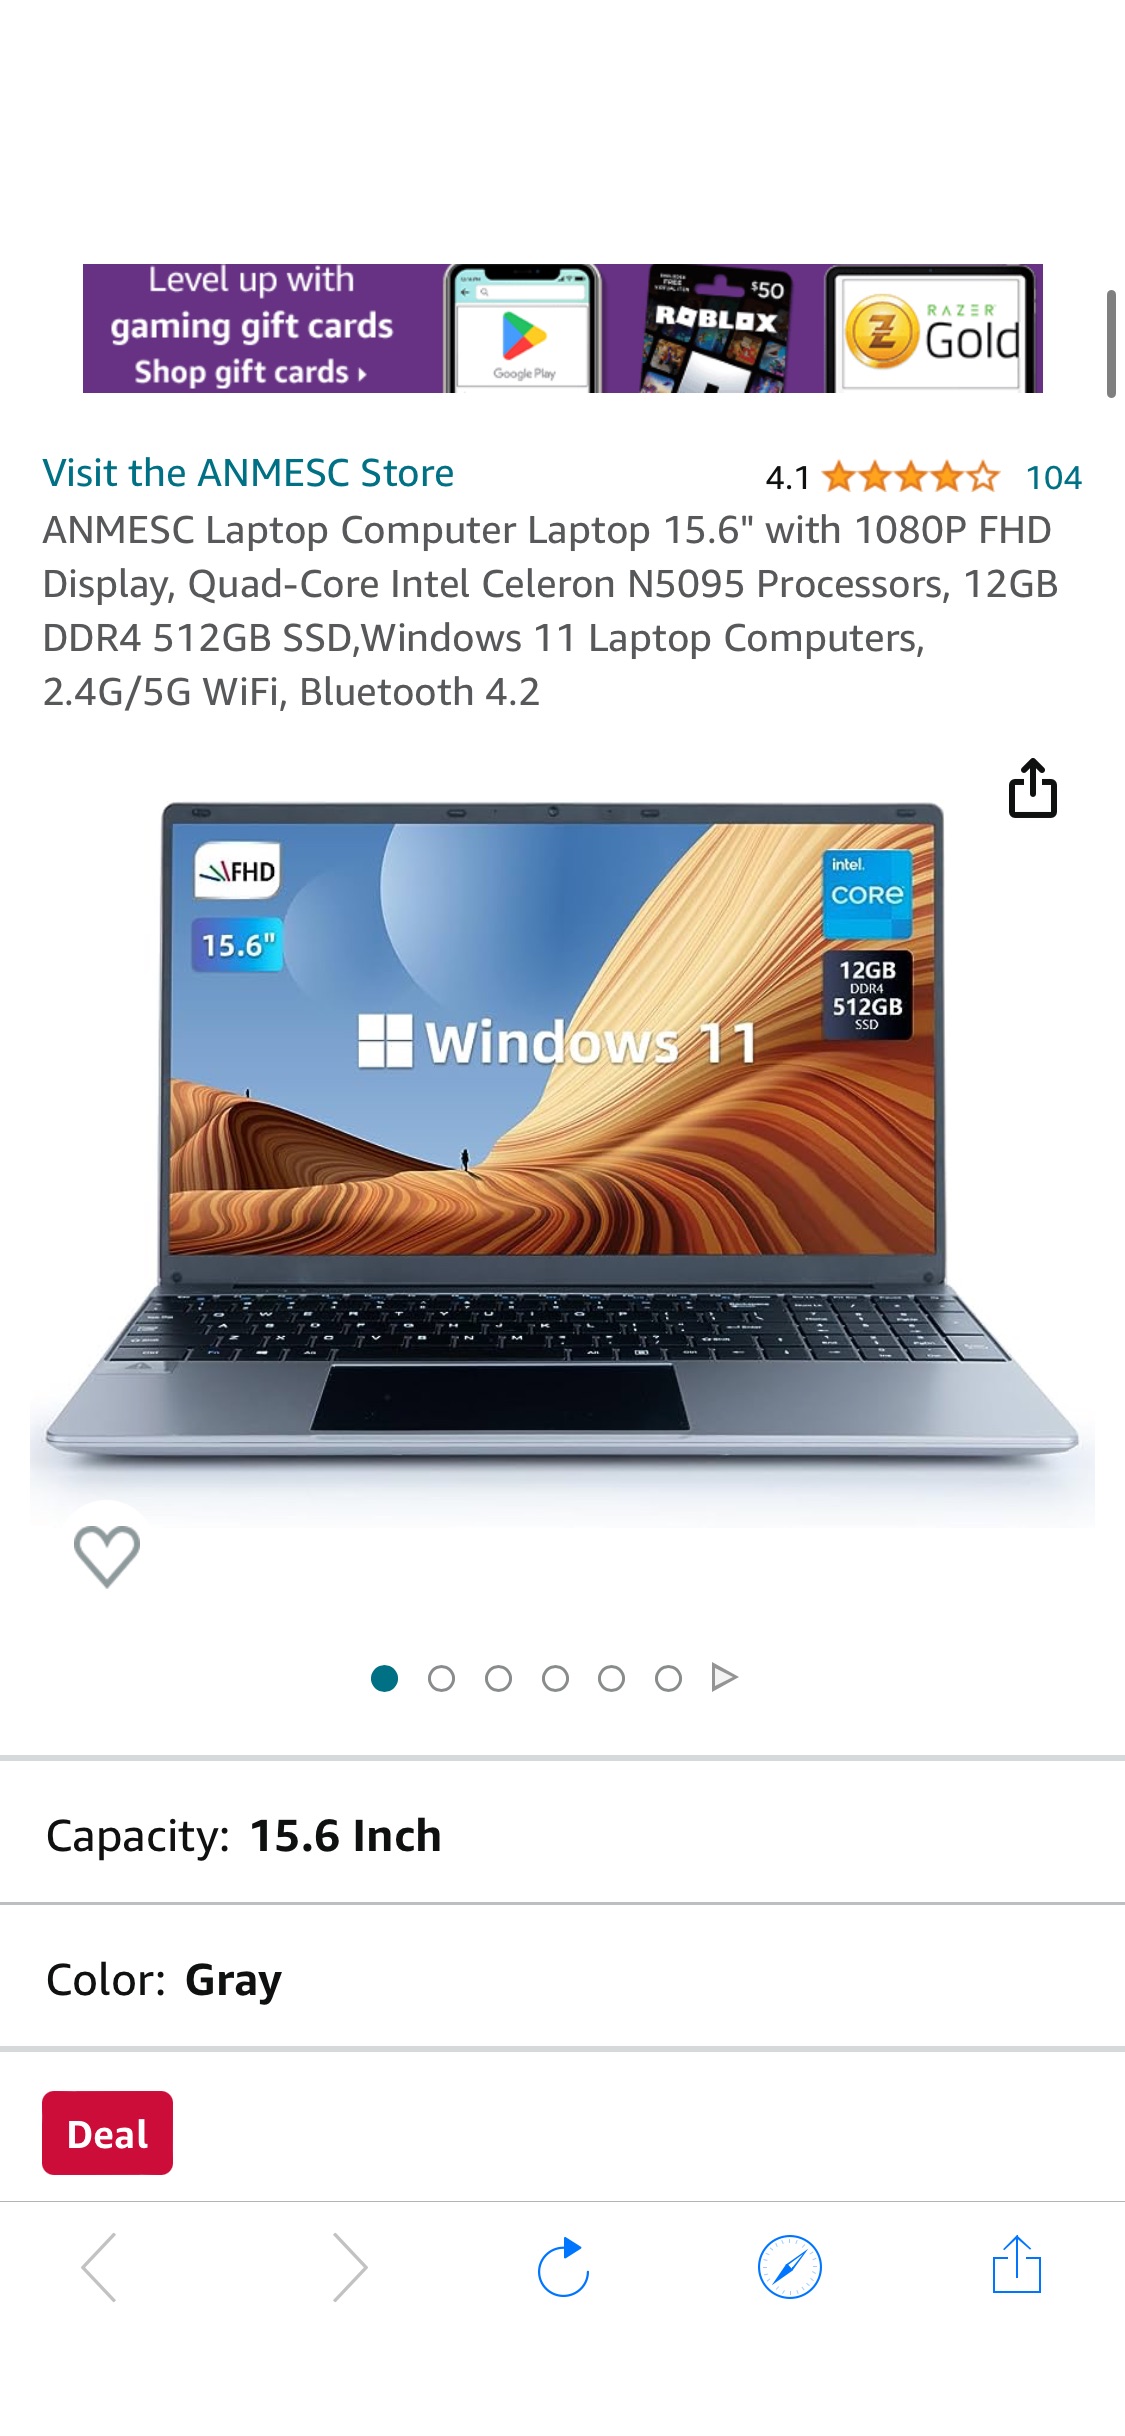 Amazon.com: ANMESC Laptop Computer Laptop 15.6" with 1080P FHD Display, Quad-Core Intel Celeron N5095 Processors, 12GB DDR4 512GB SSD,Windows 11 Laptop Computers, 2.4G/5G WiFi, Bluetooth 4.2 : Electro